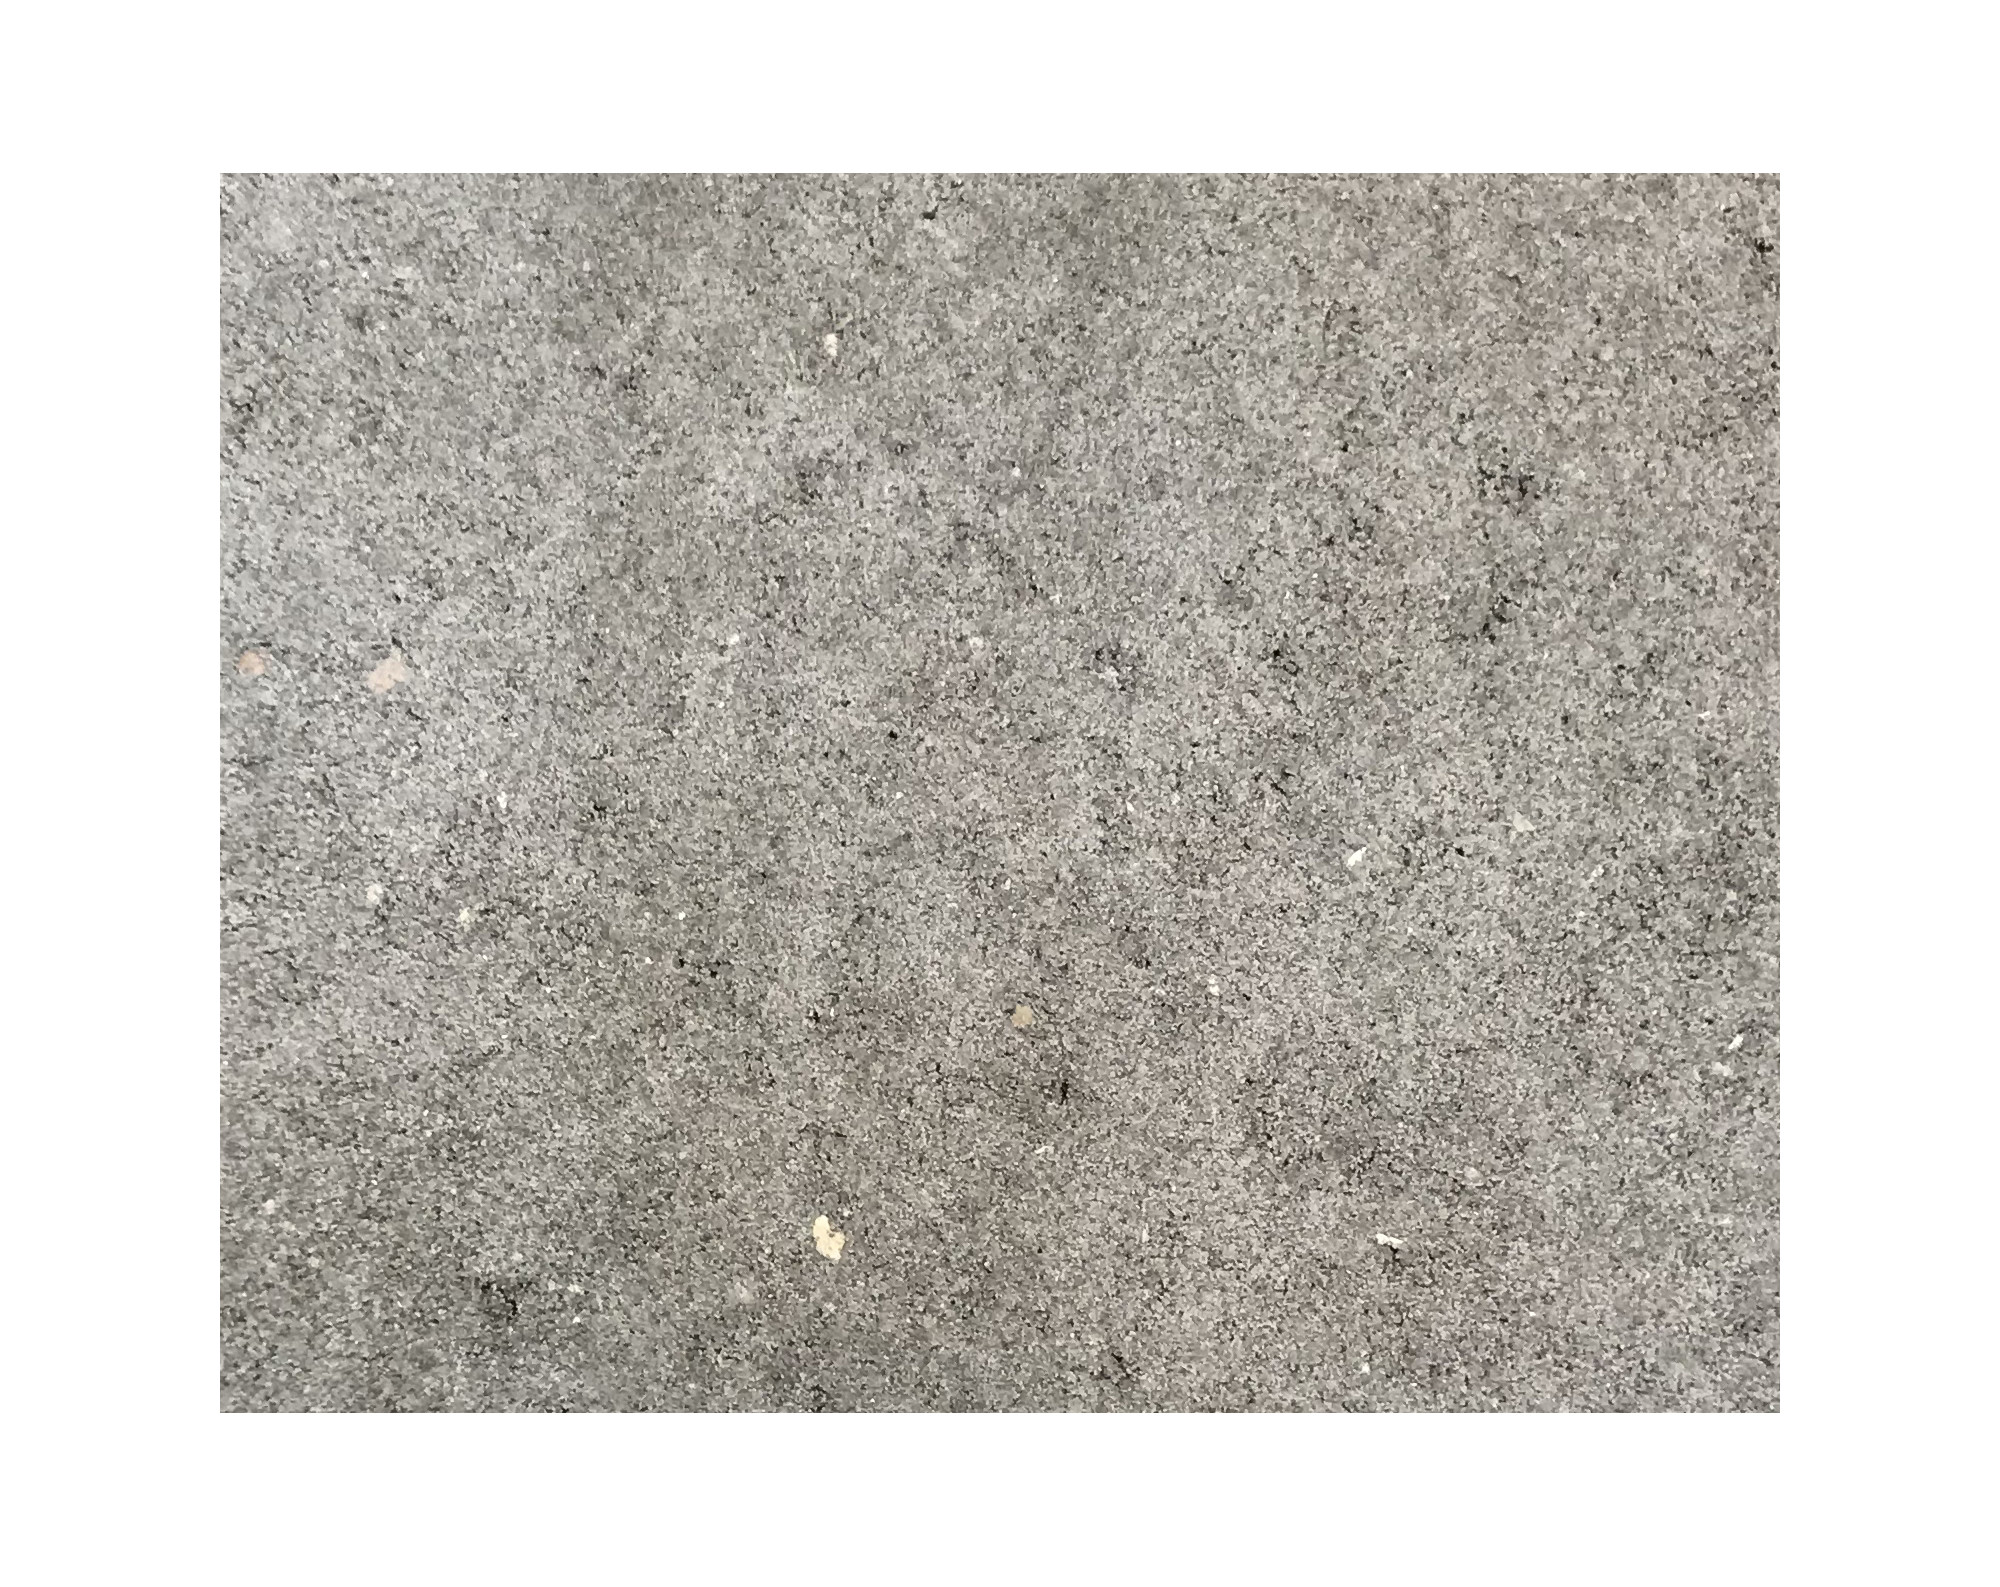 Harmo roc nevadaset, rustica-serie, ovaal d:3,50mx6,20m, grijs, beton